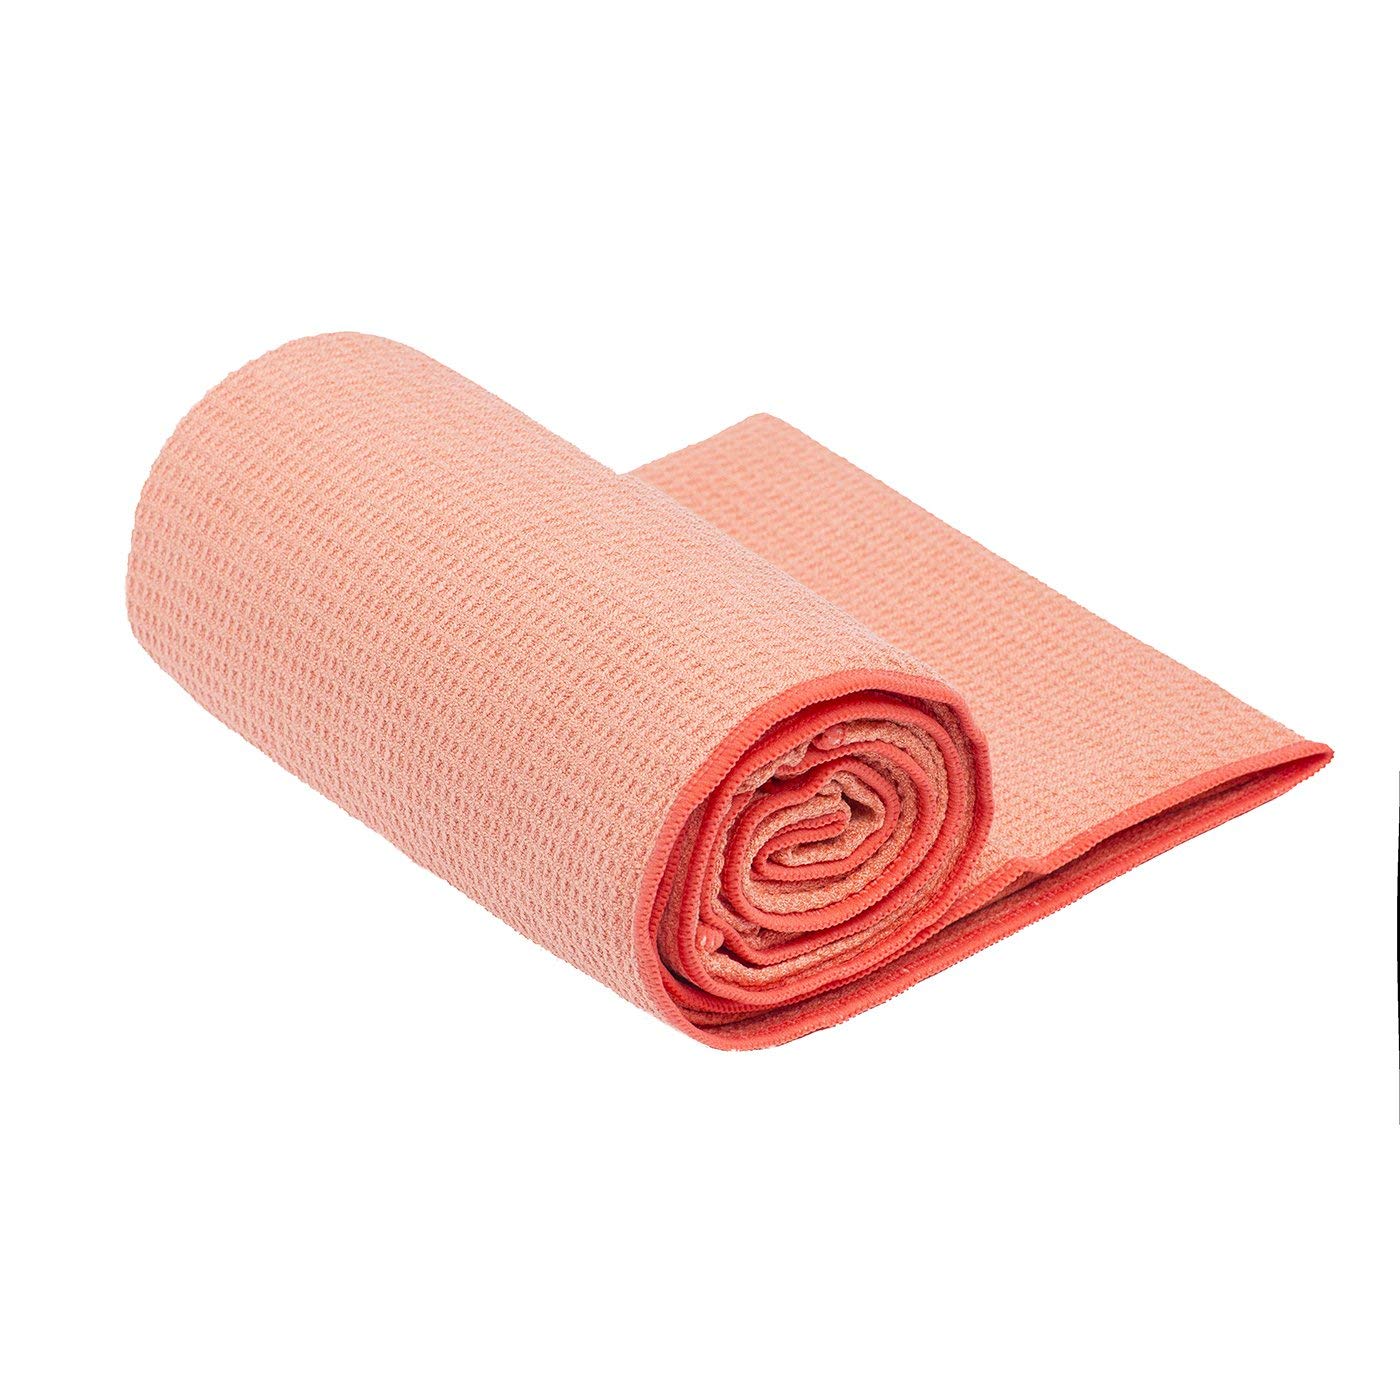 shandali yoga towel